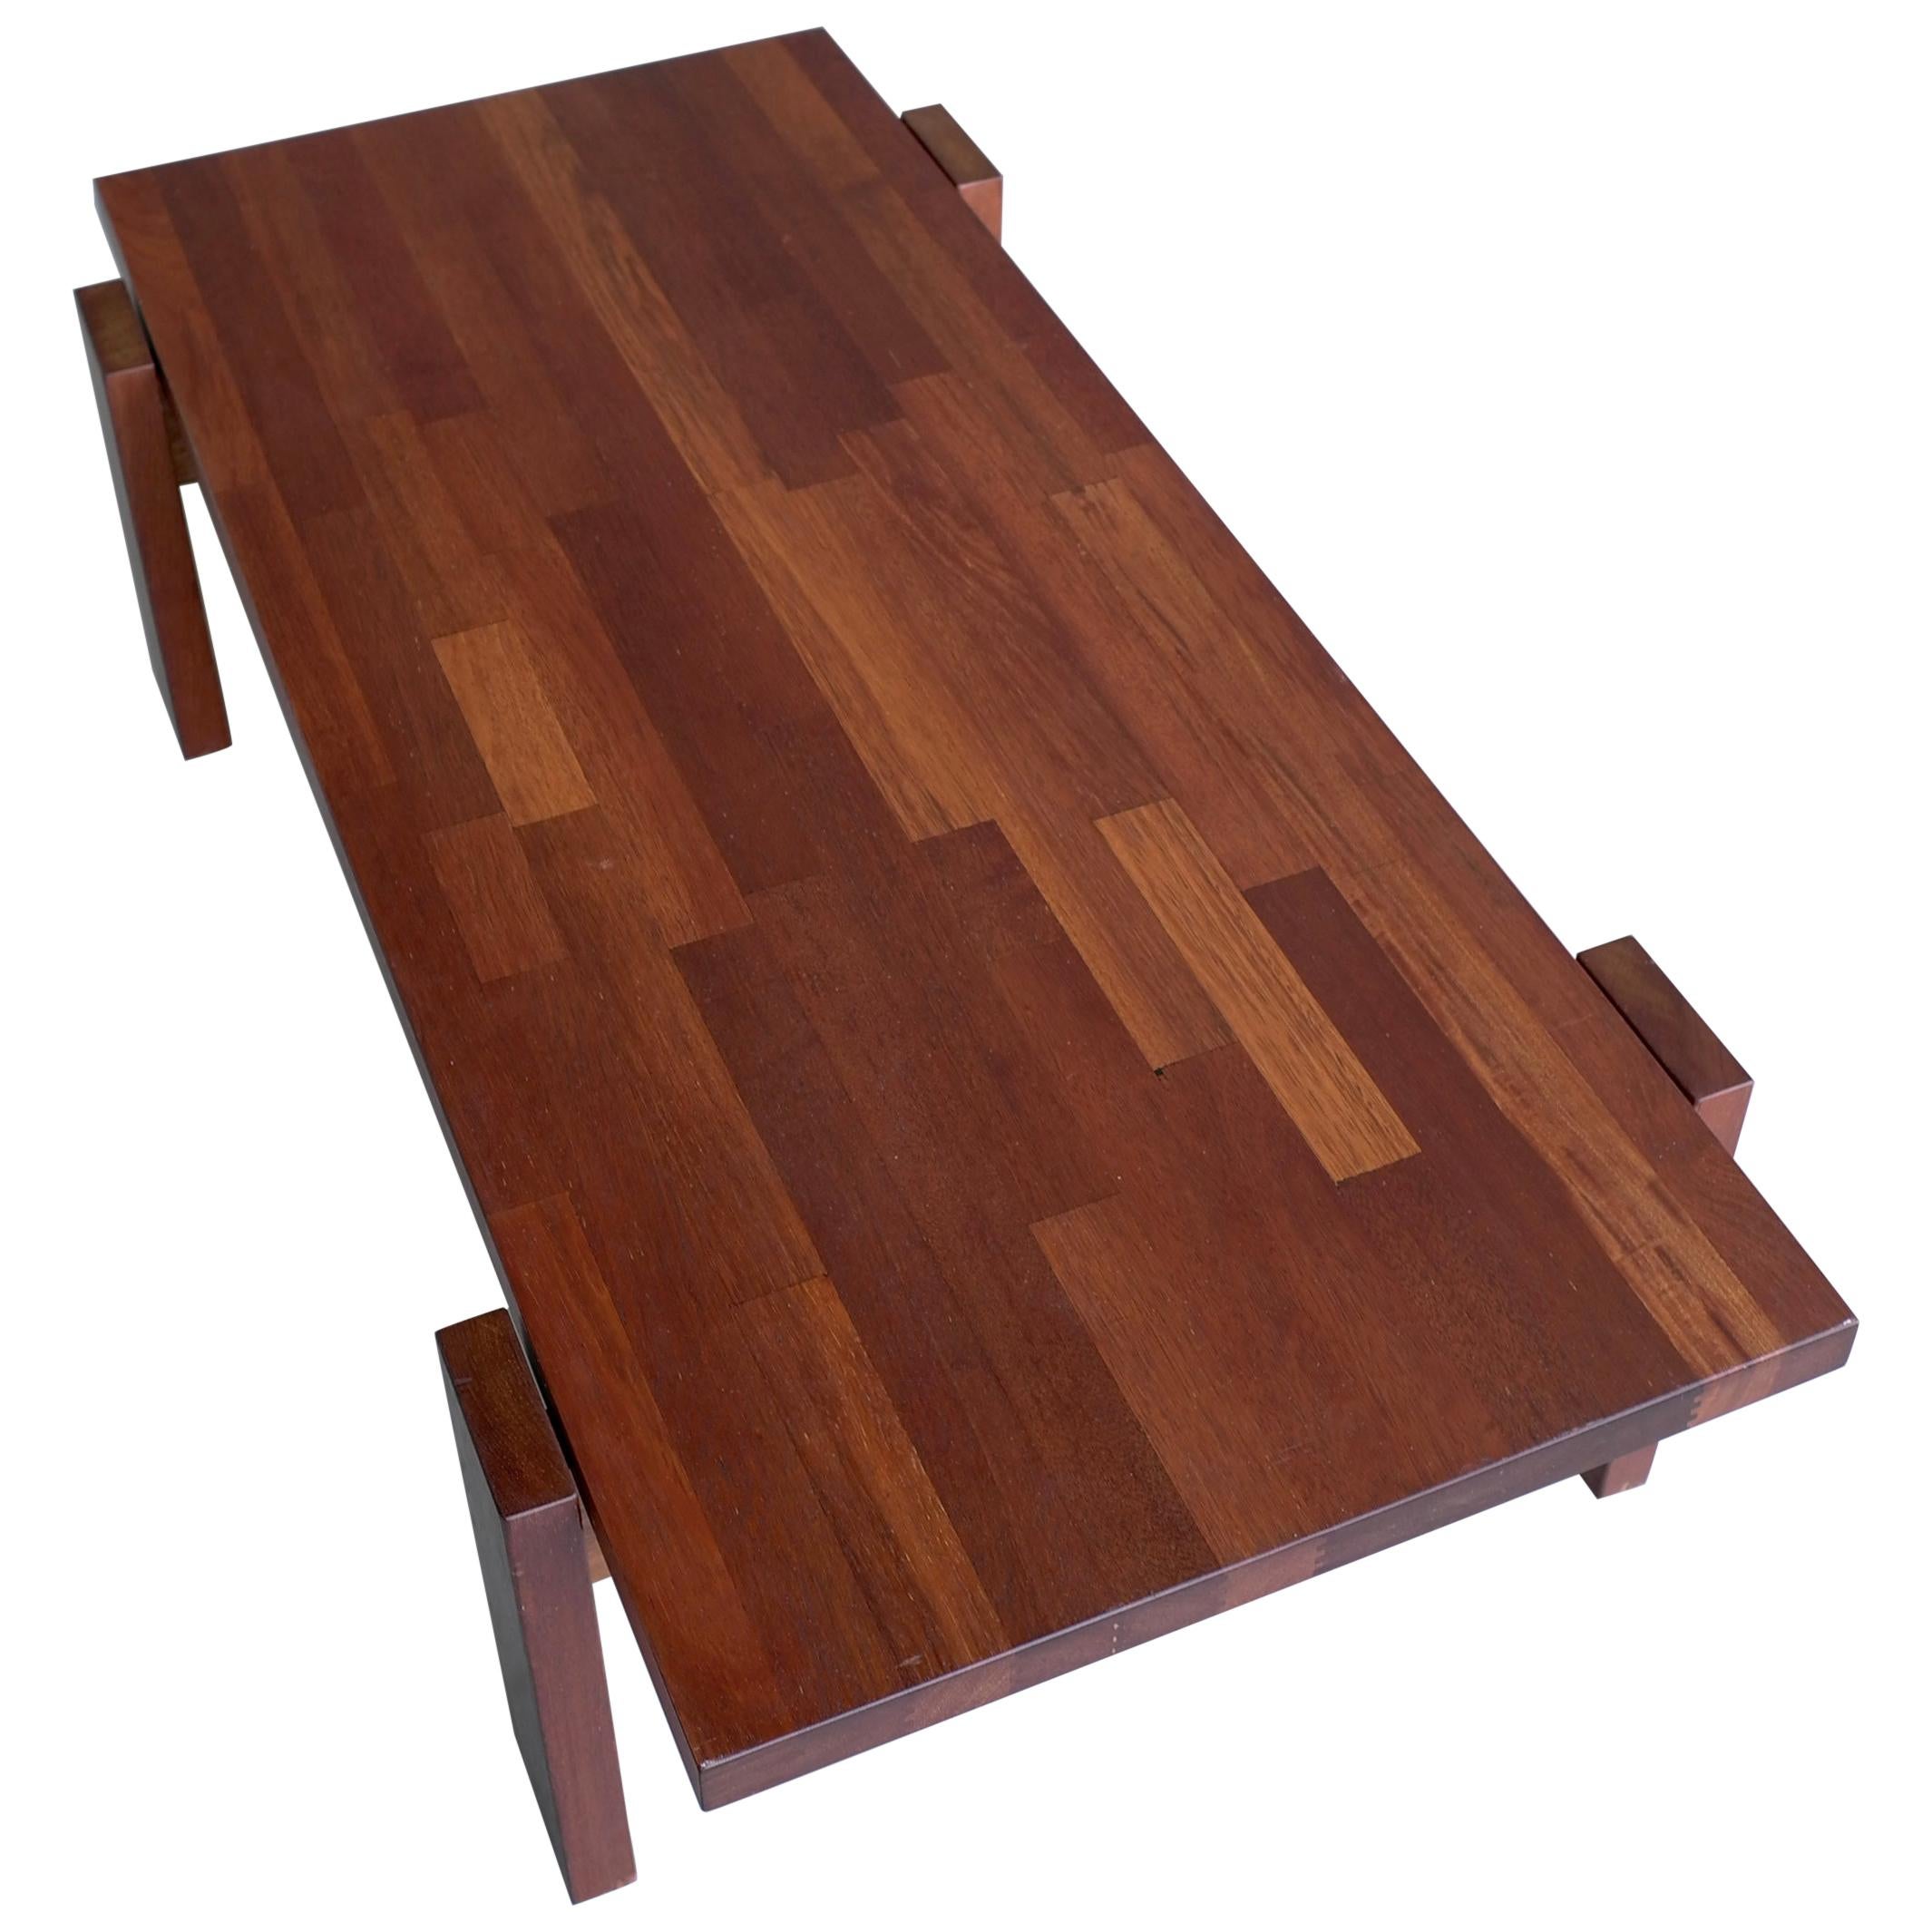 Robust Hardwood Coffee Table in Style of Jorge Zalszupin, Brazil, 1960s